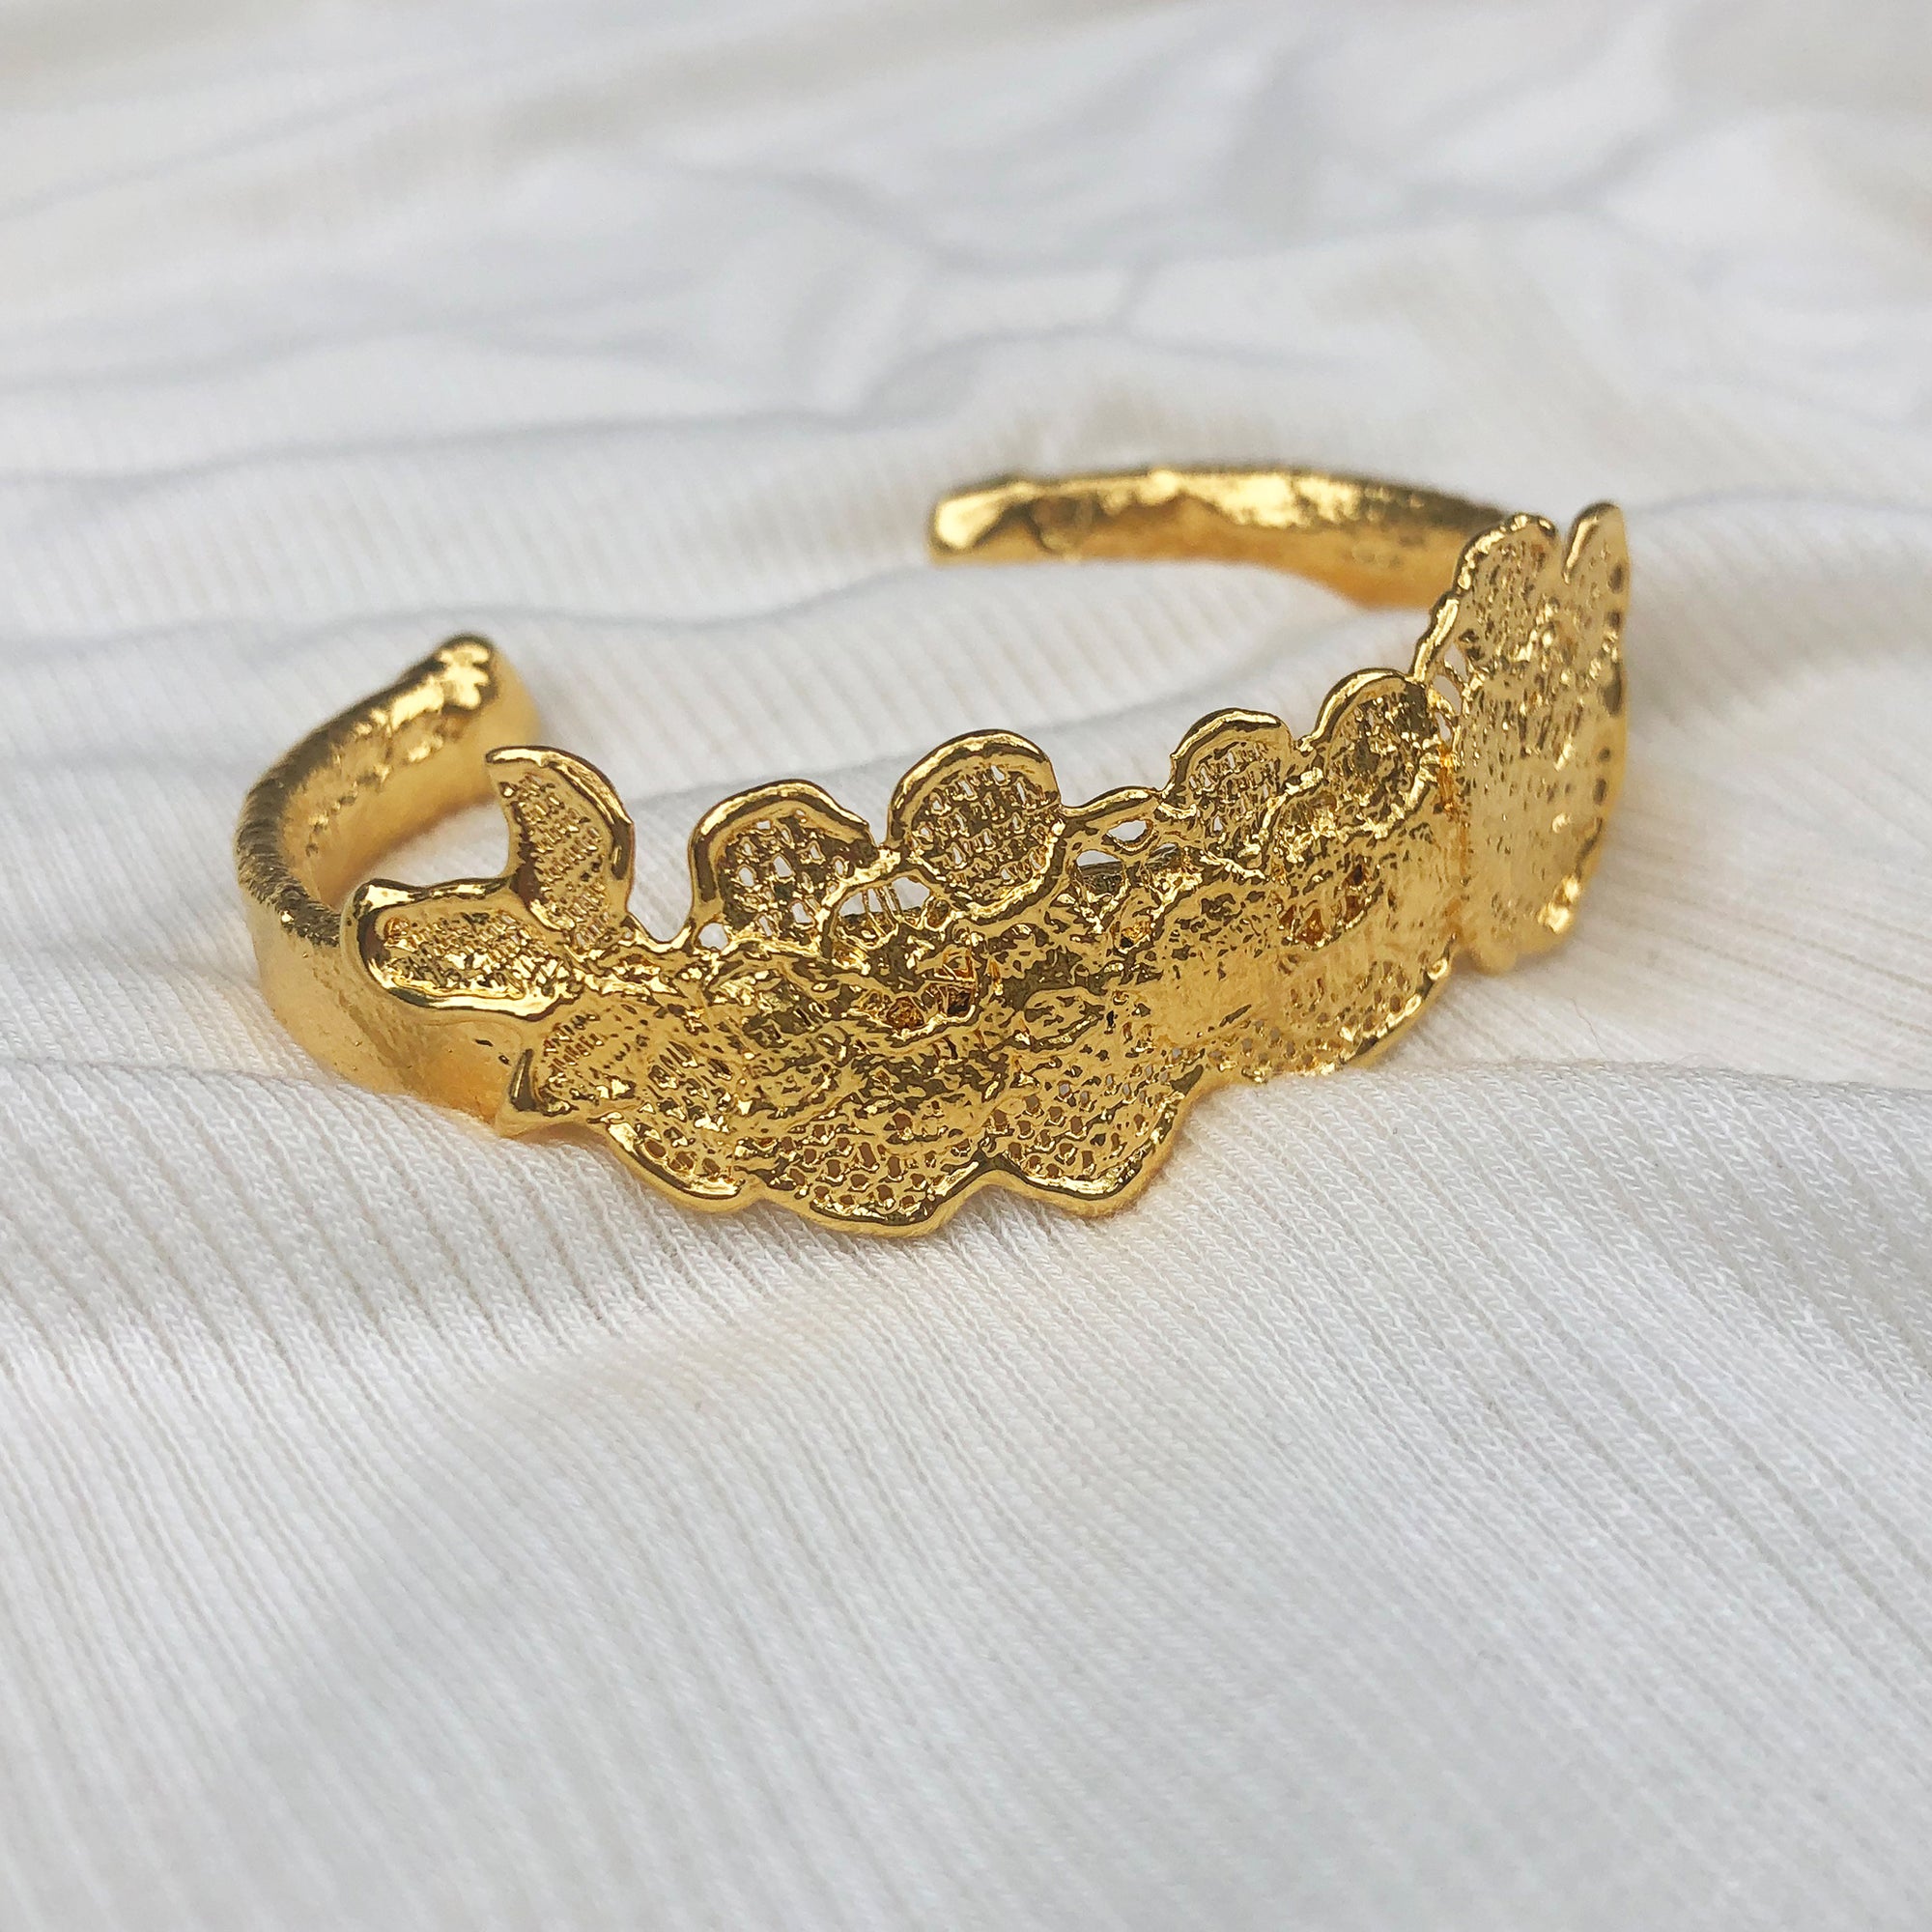 Alex lace bracelet in brilliant 24k gold. 